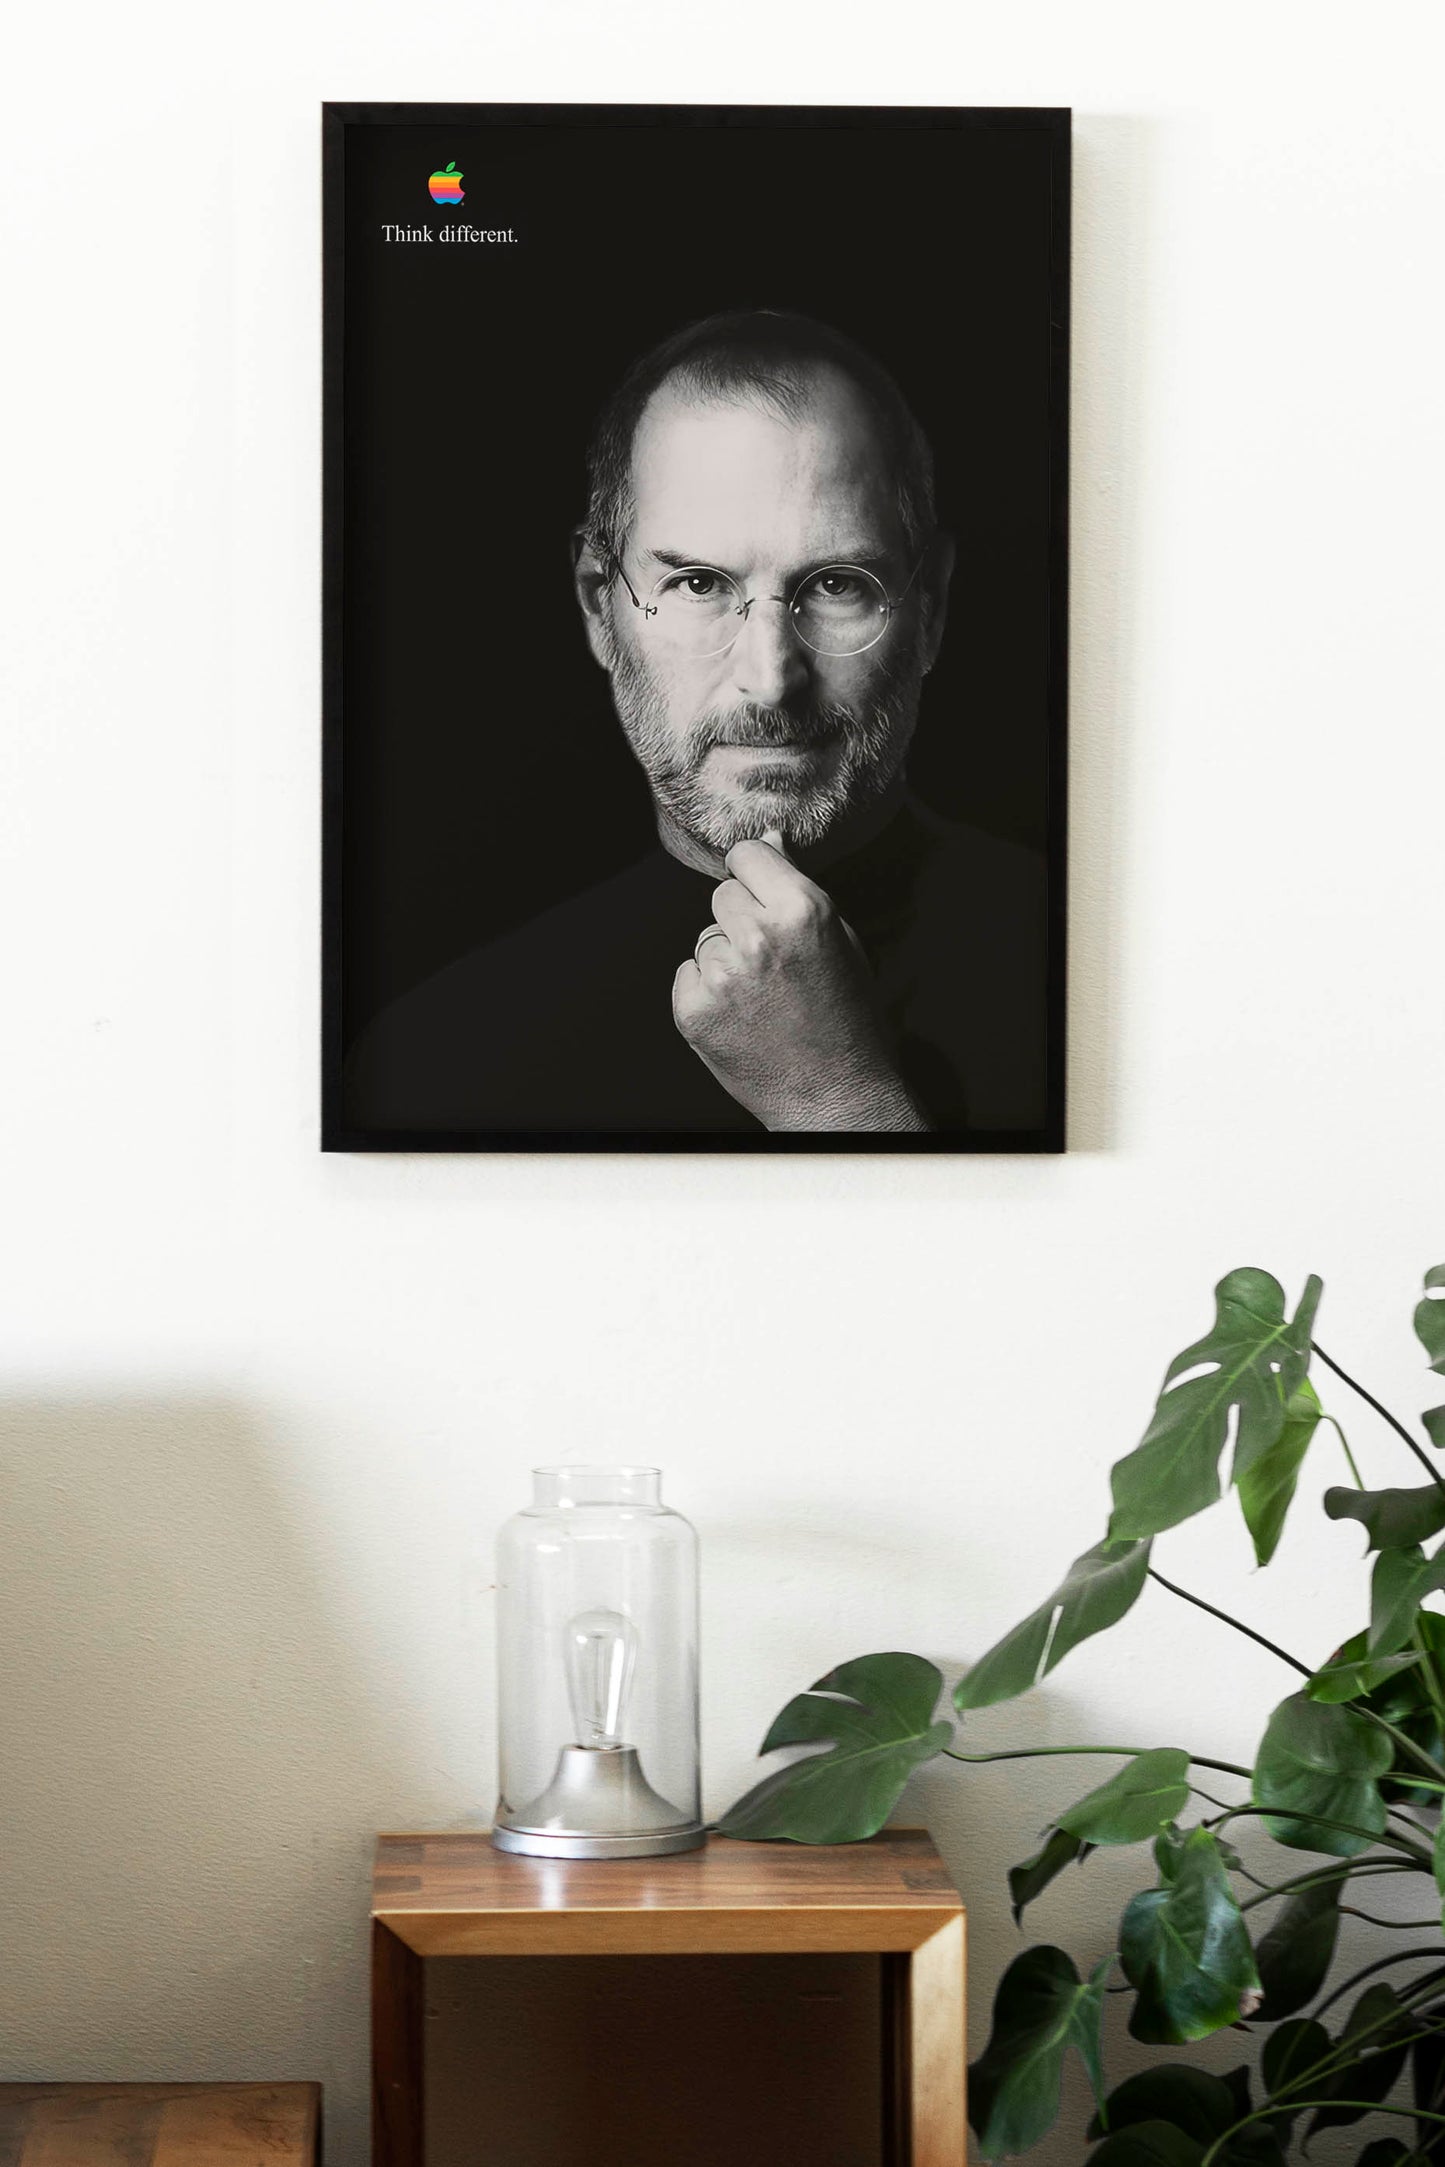 Apple Steve Jobs "Think Different" Poster